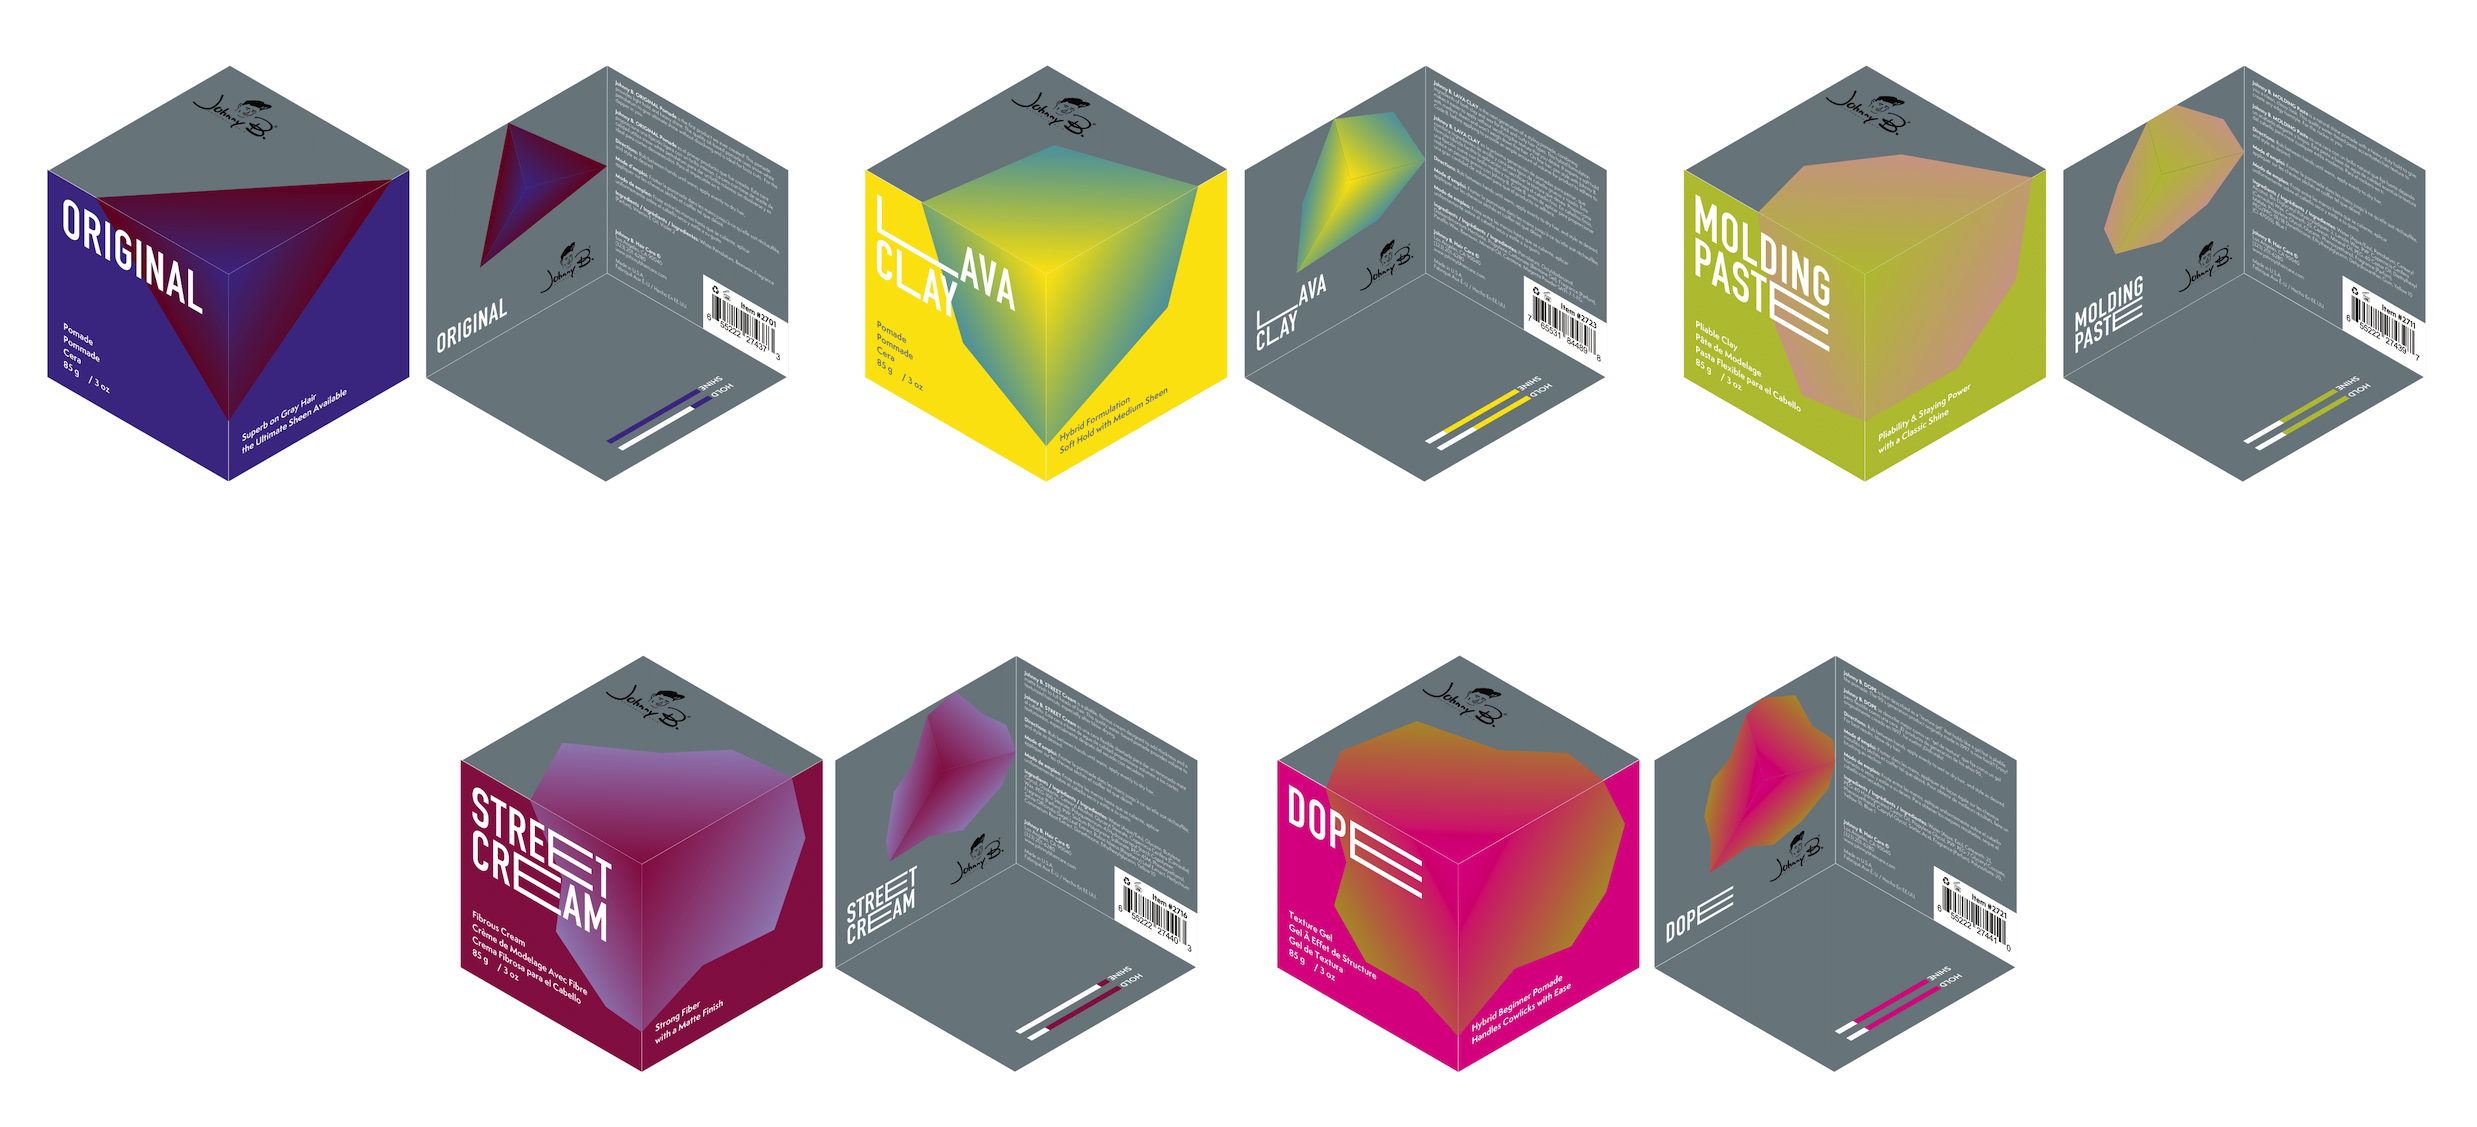 Pomade packaging redesign artwork